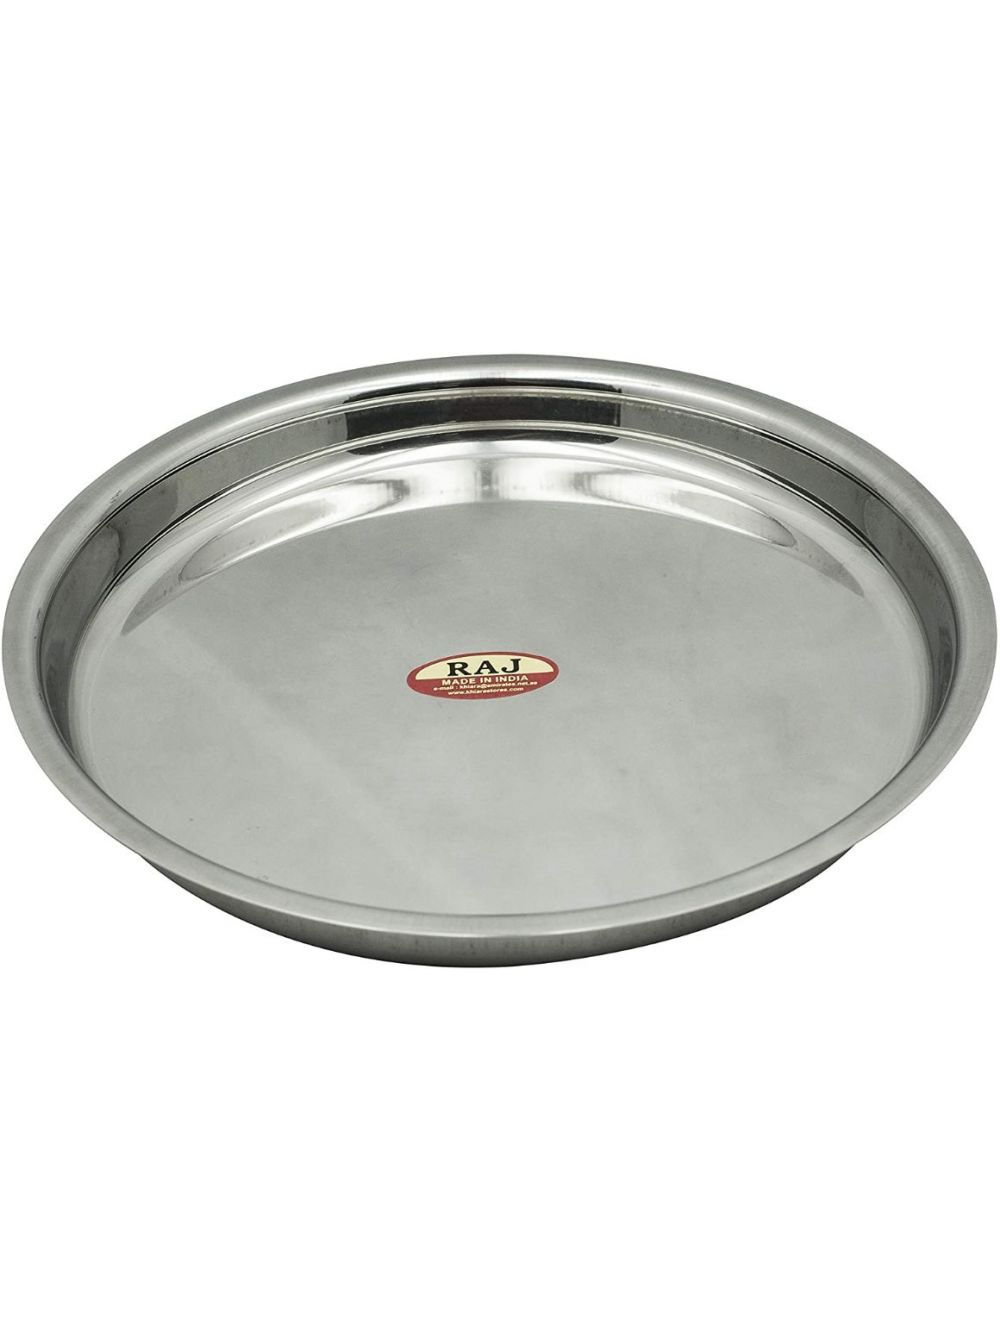 Raj Steel Plate, Silver, 28 cm, TP0012